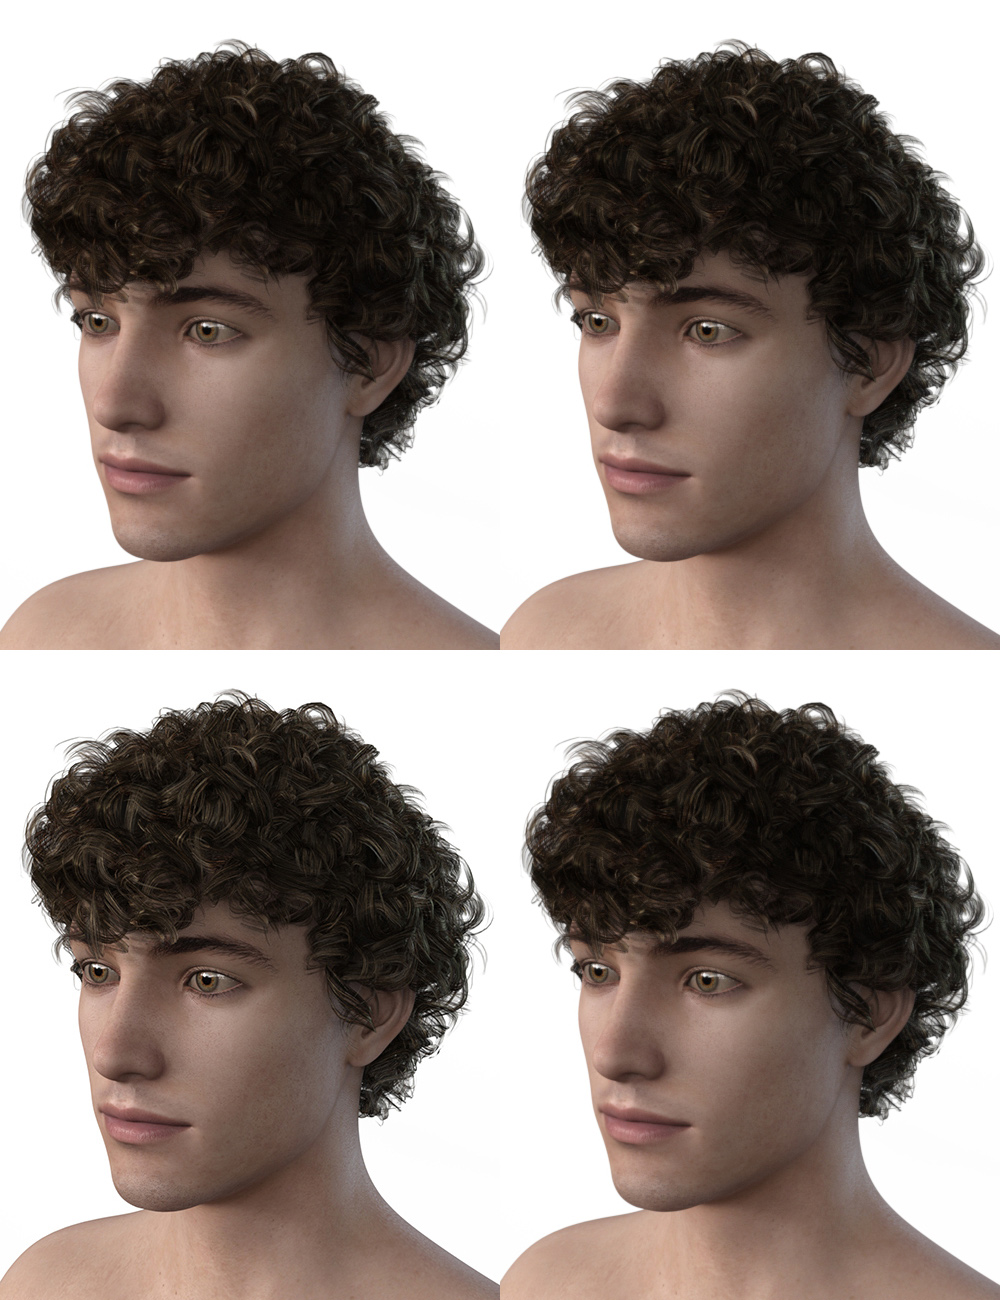 FBX- Base Male Seventies Style by: Paleo, 3D Models by Daz 3D